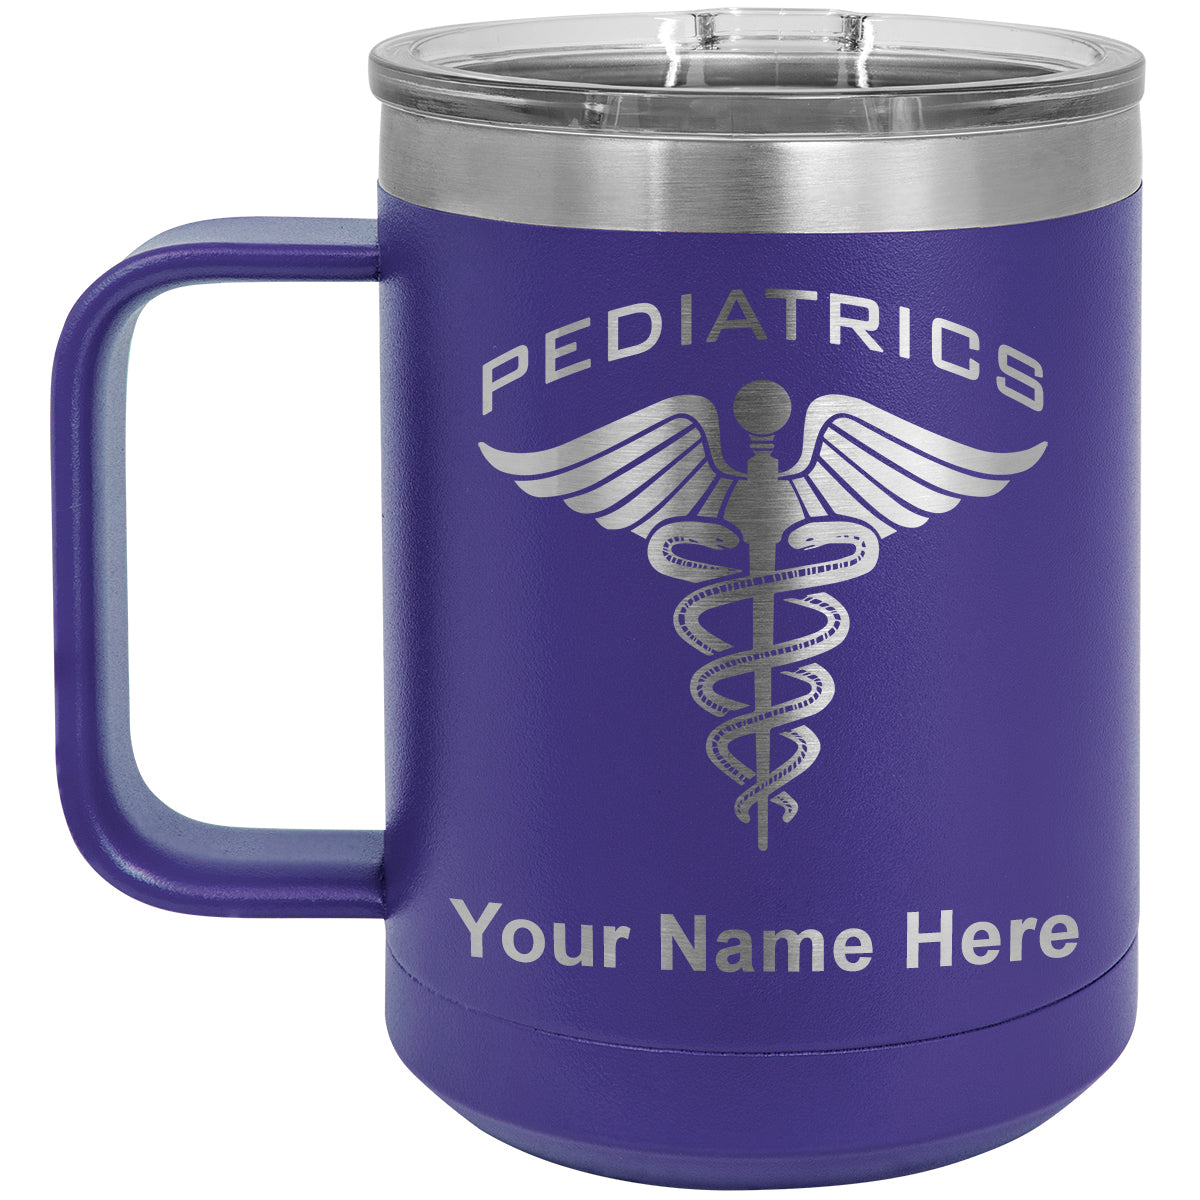 15oz Vacuum Insulated Coffee Mug, Pediatrics, Personalized Engraving Included